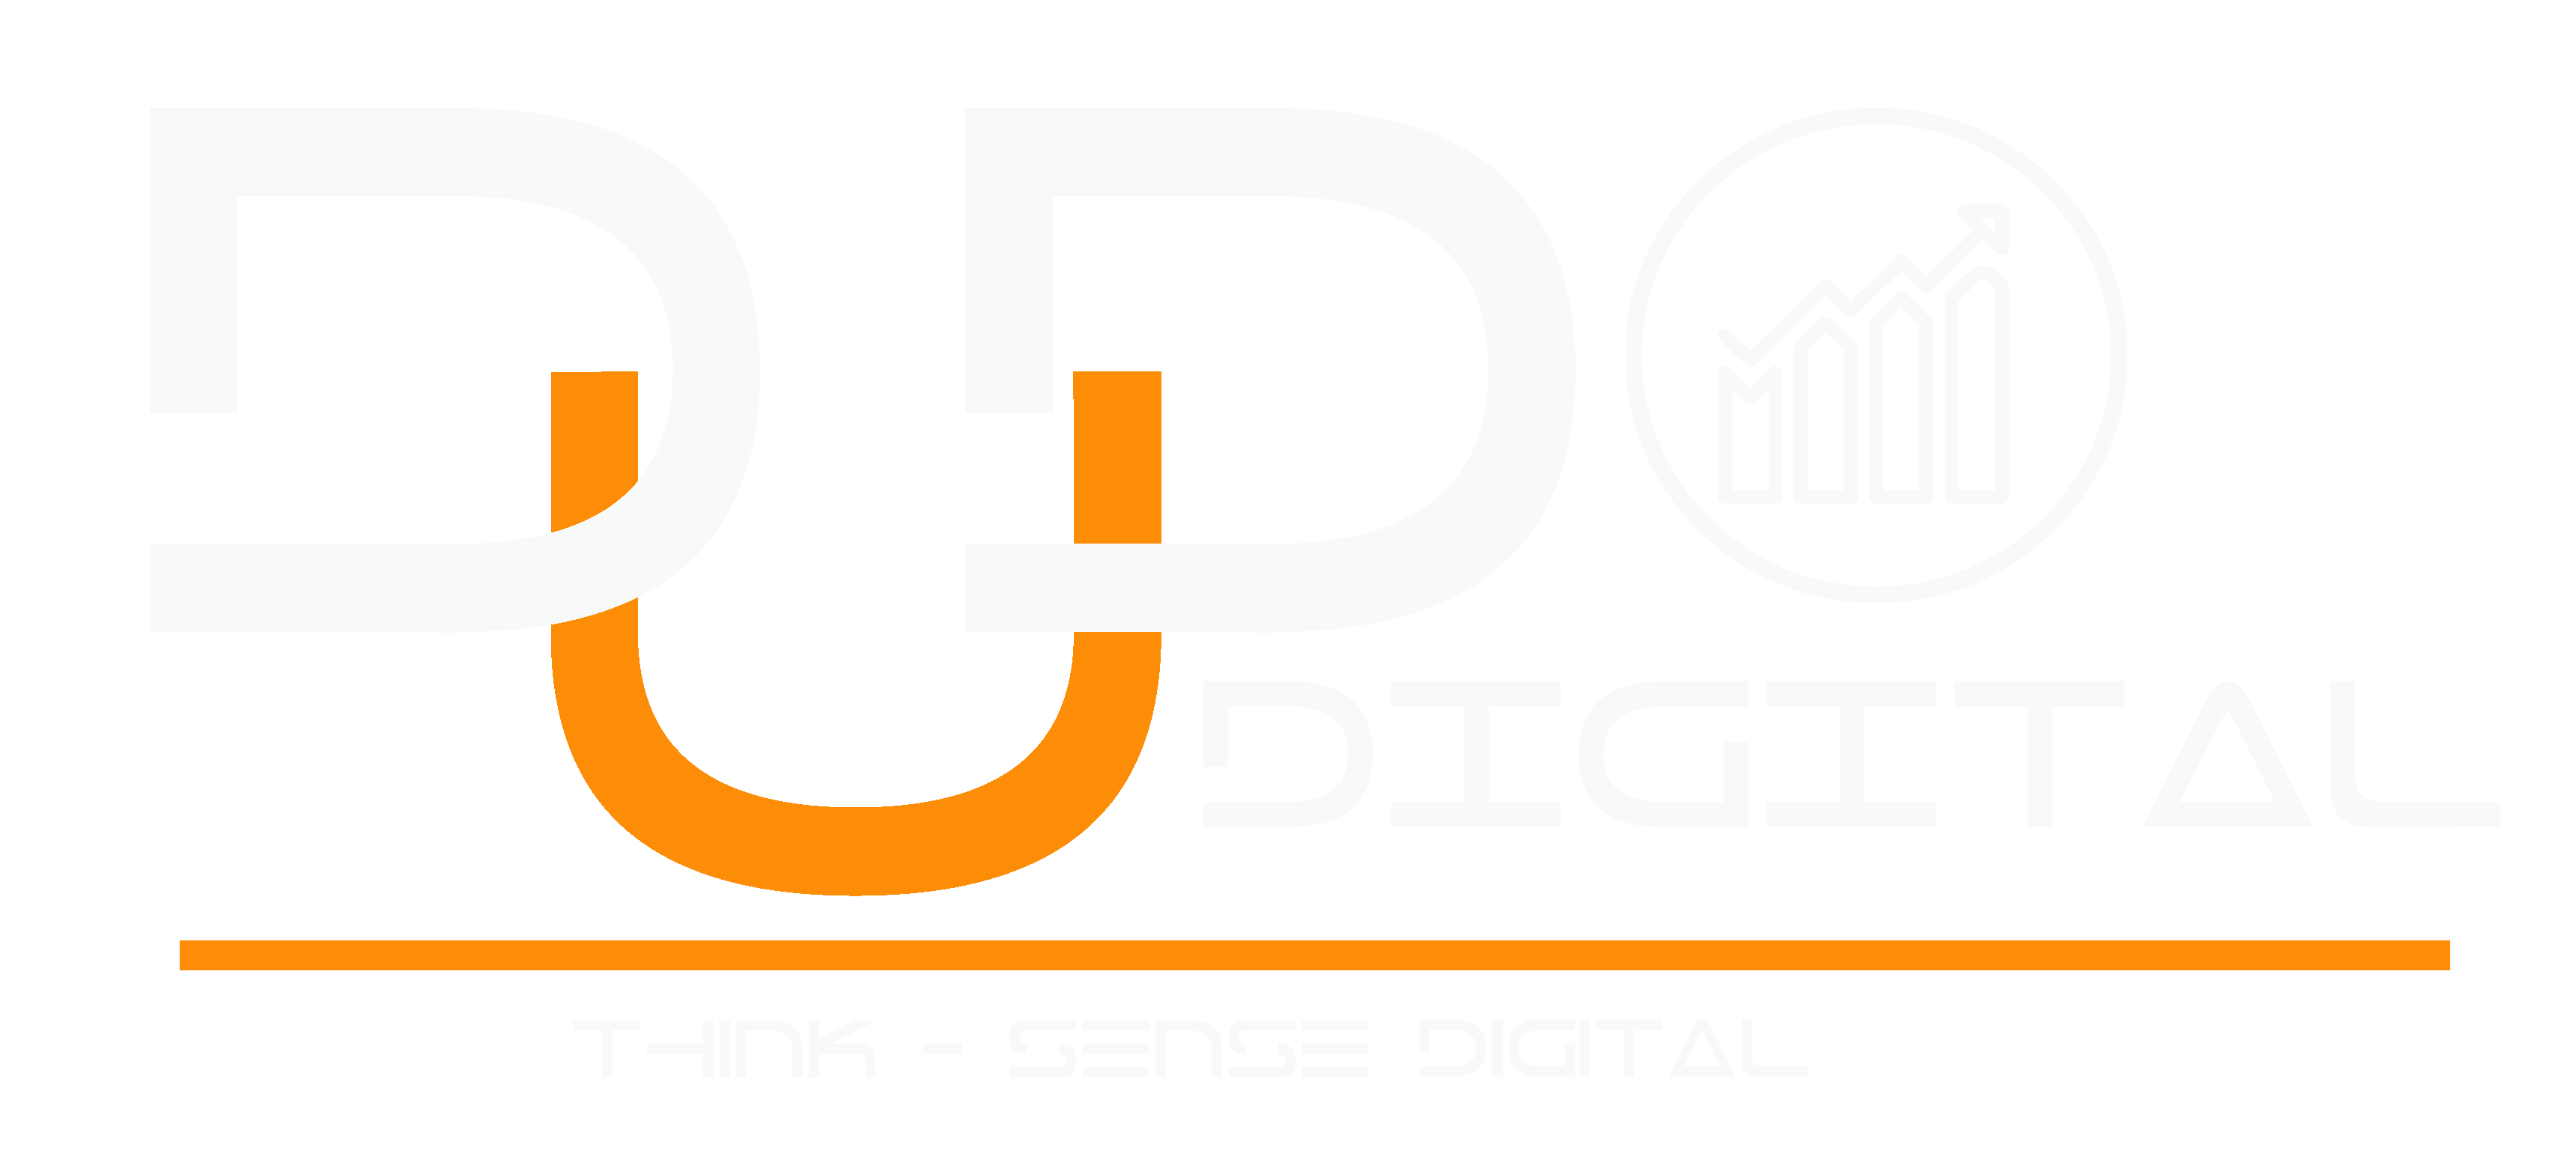 DudoDigital